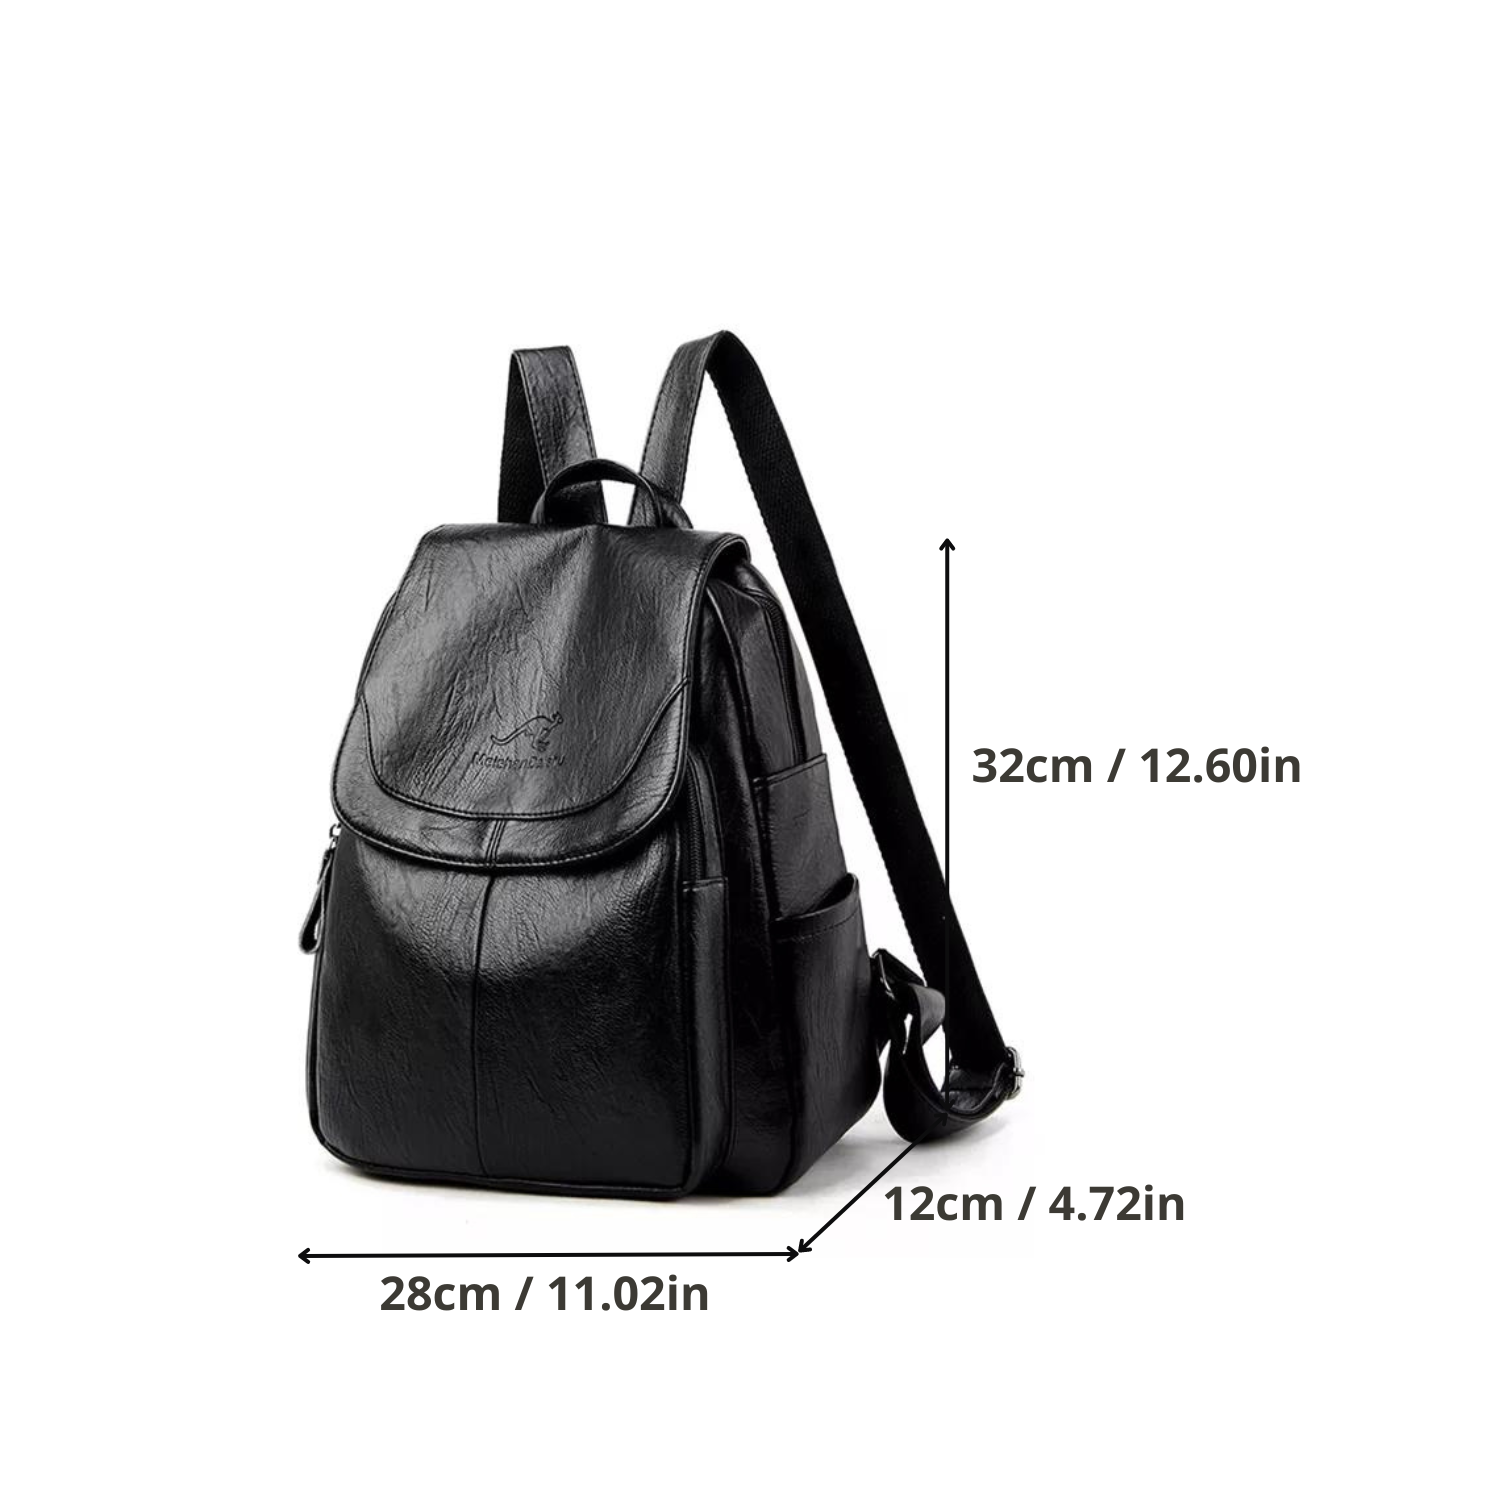 Sleek Urban Leather Backpack for Women